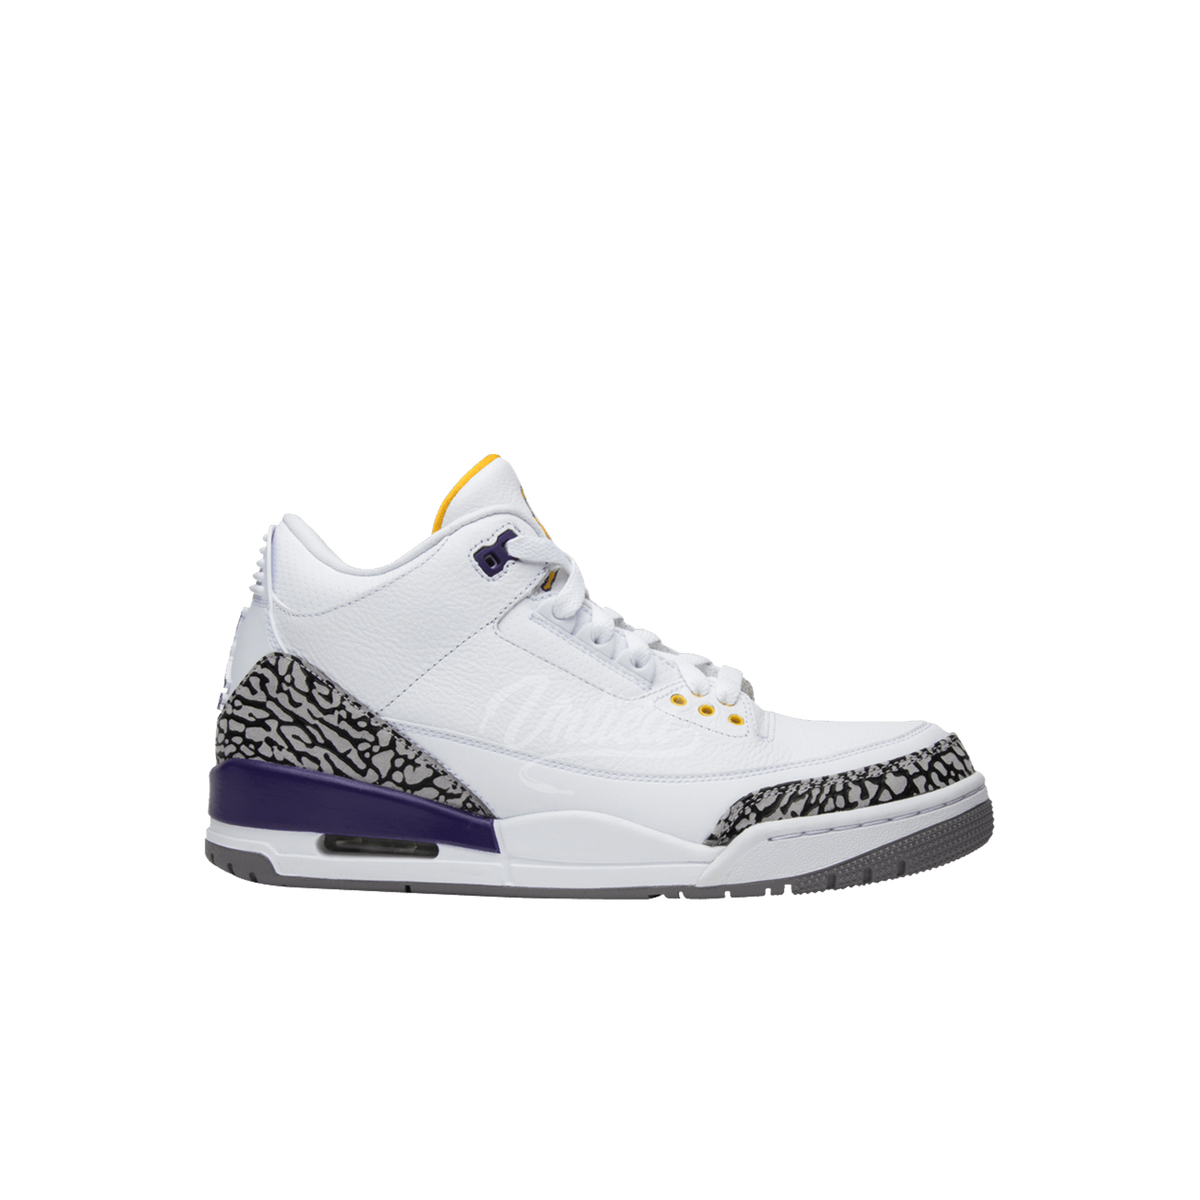 Air Jordan 3 Kobe Bryant PE "White/Purple"